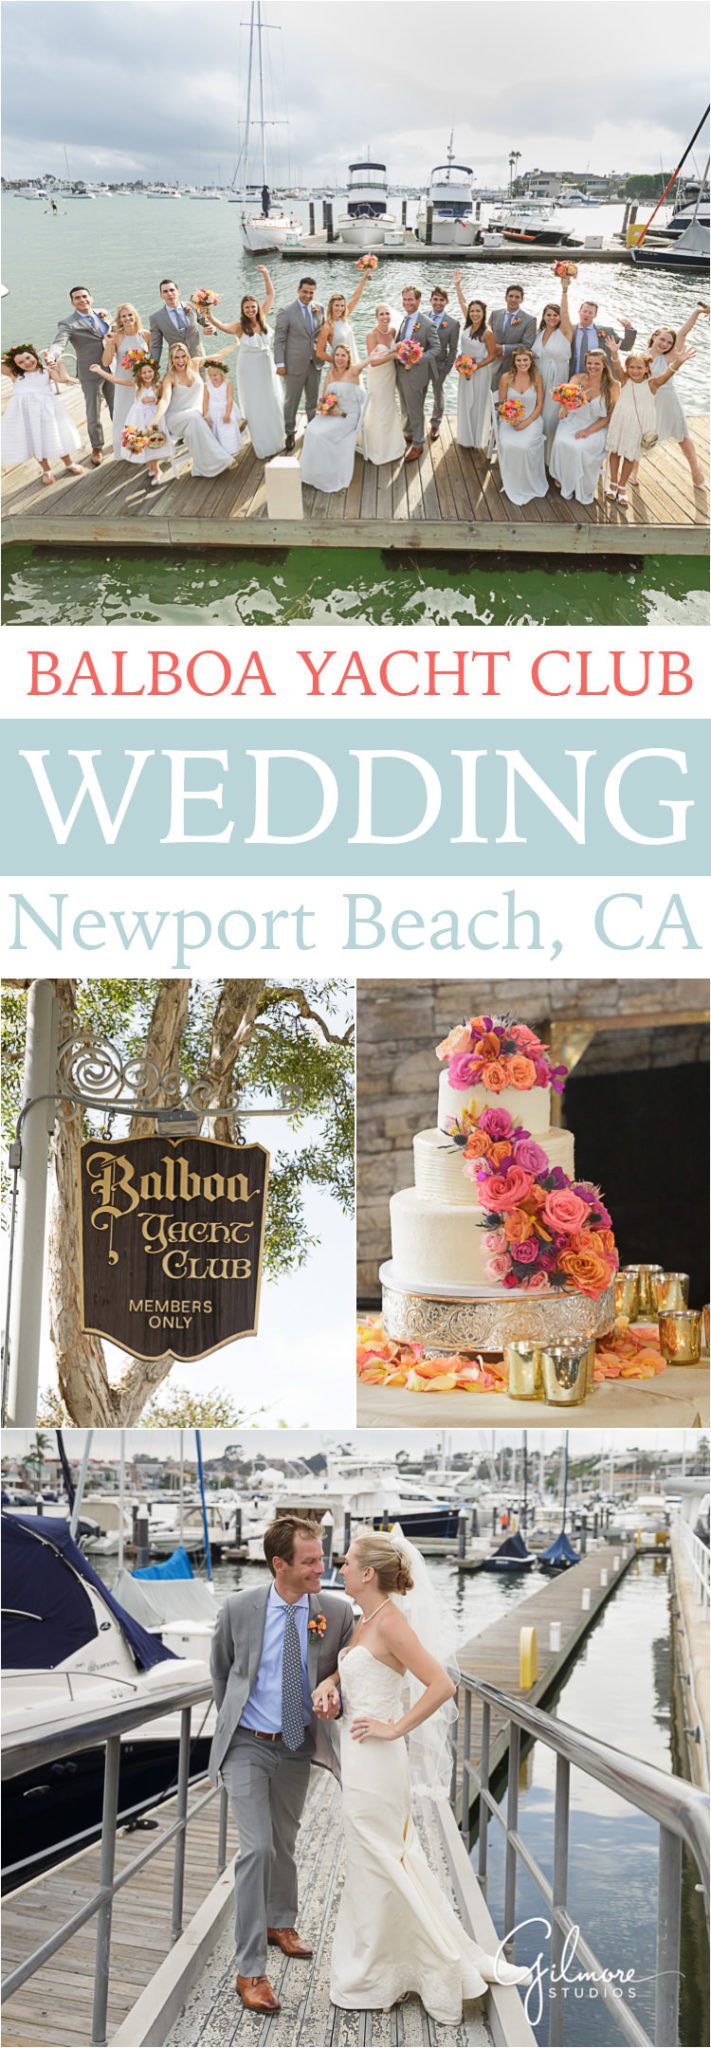 Balboa-yacht-club-wedding-photographer-newport-beach-CA